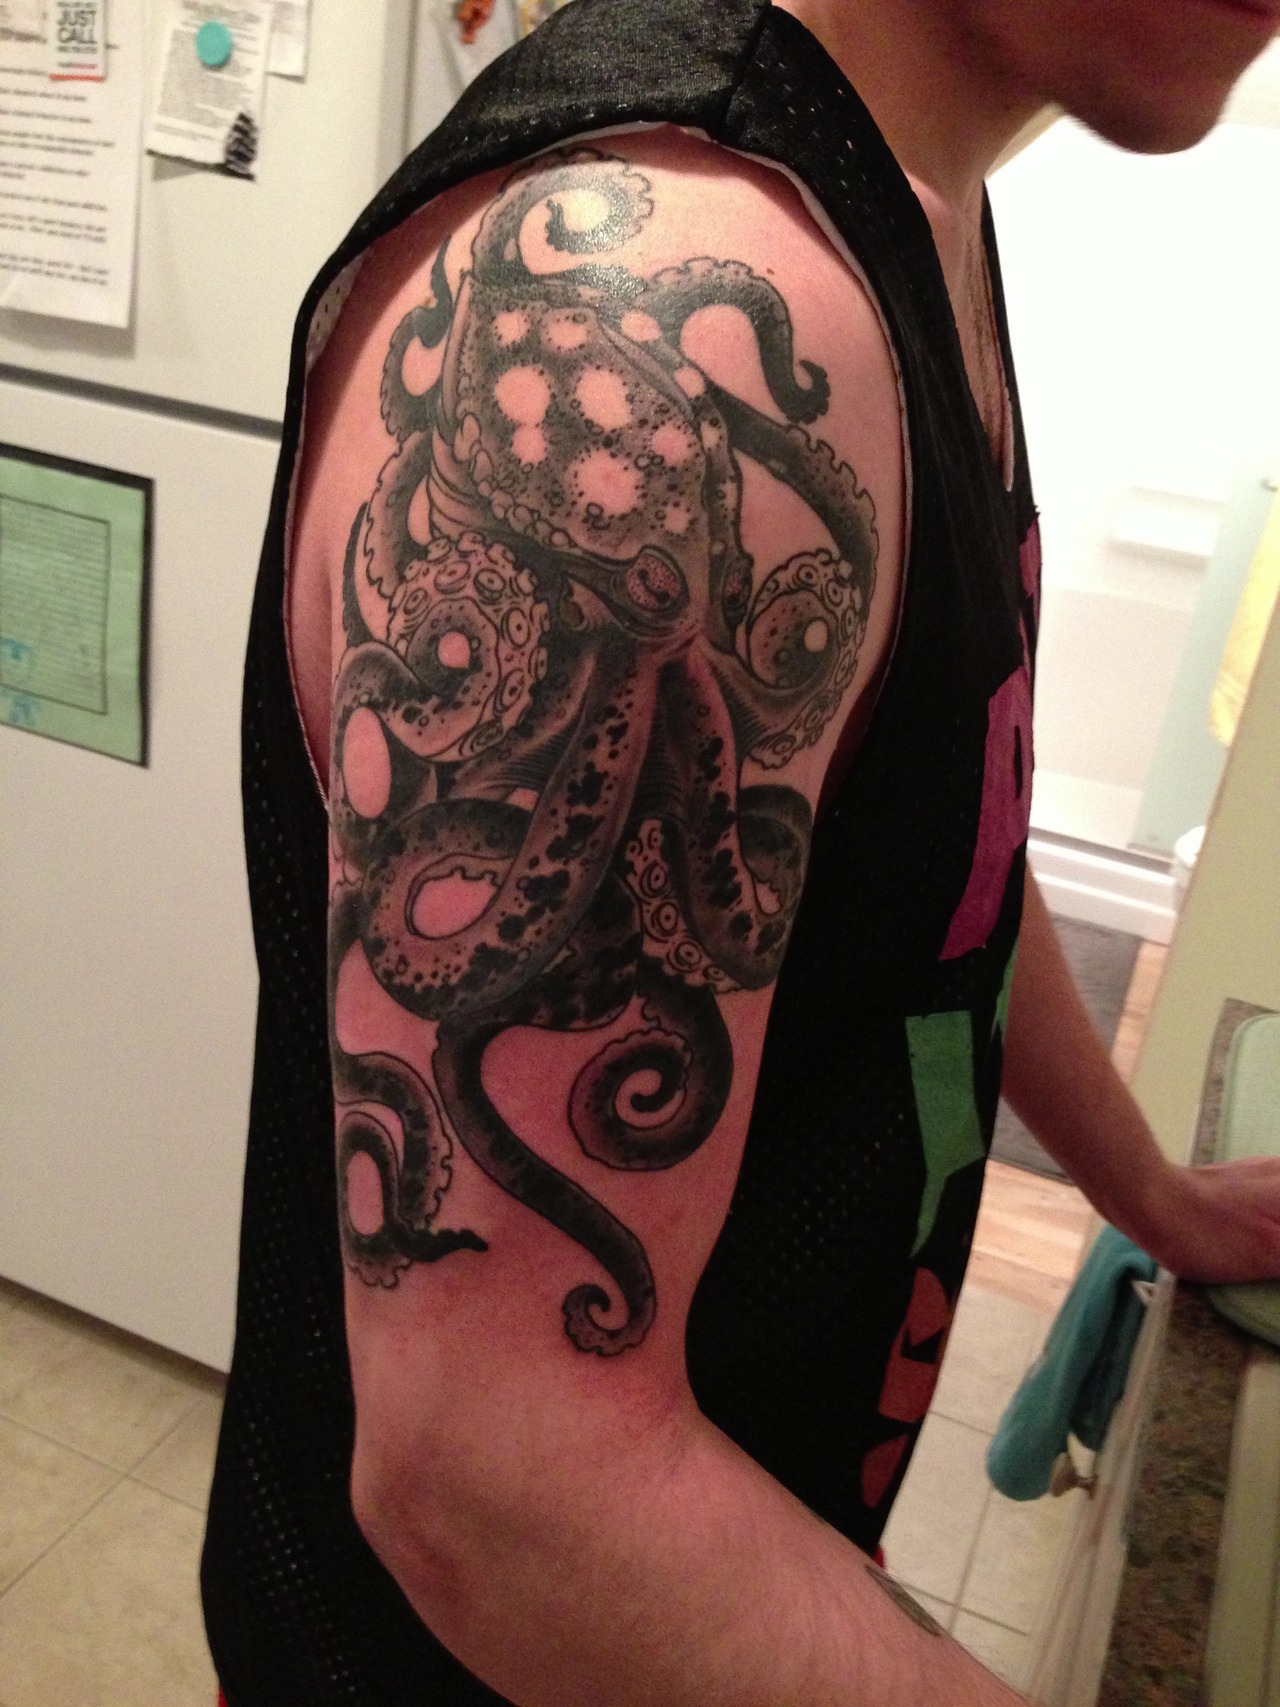 Octopus sleeve tattoo